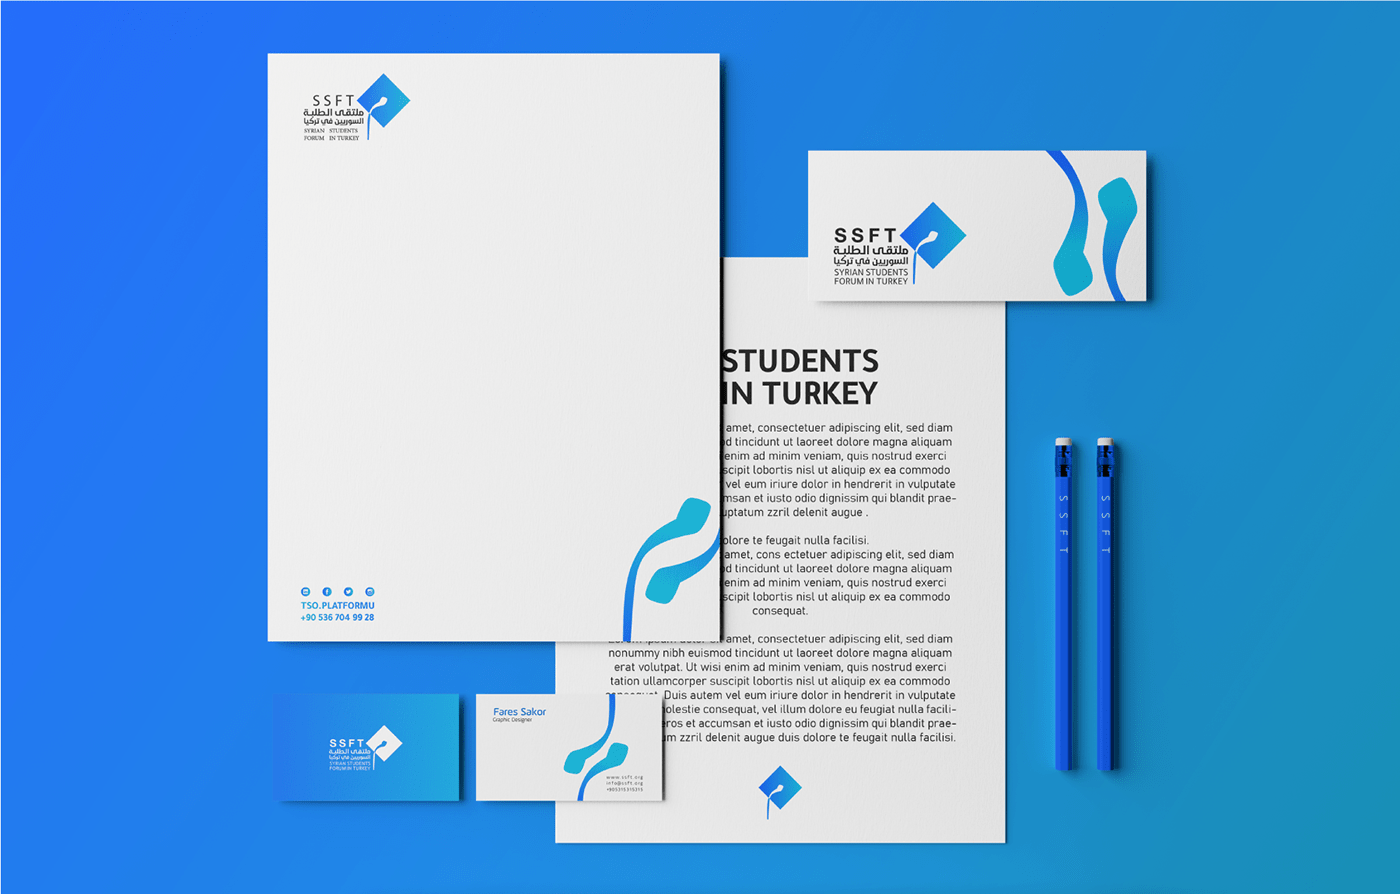 blue brand forum logo Students Syrian Studnets creative Logo Design Syria Turkey